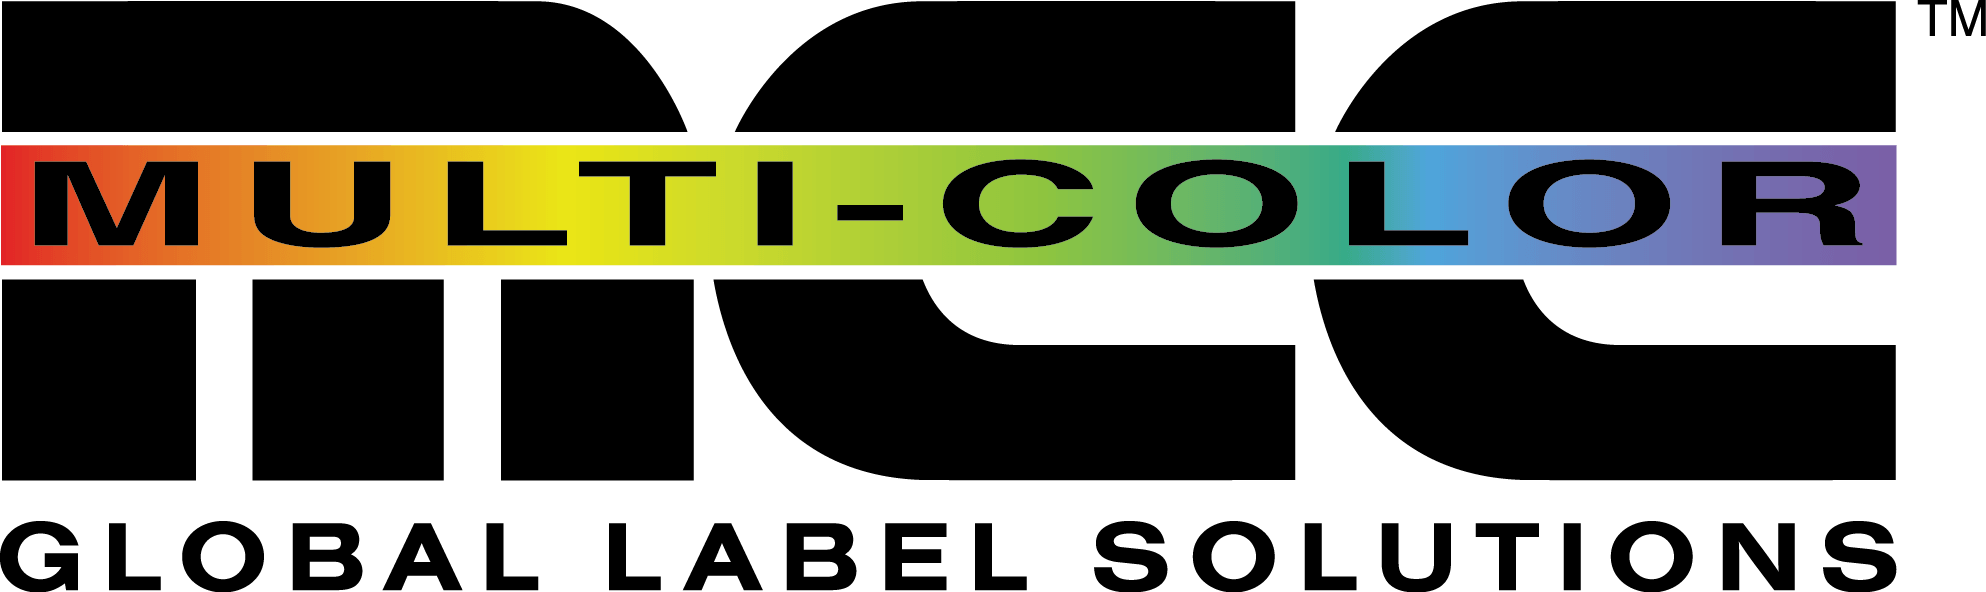 Multicolor Corp Logo - Members Directory